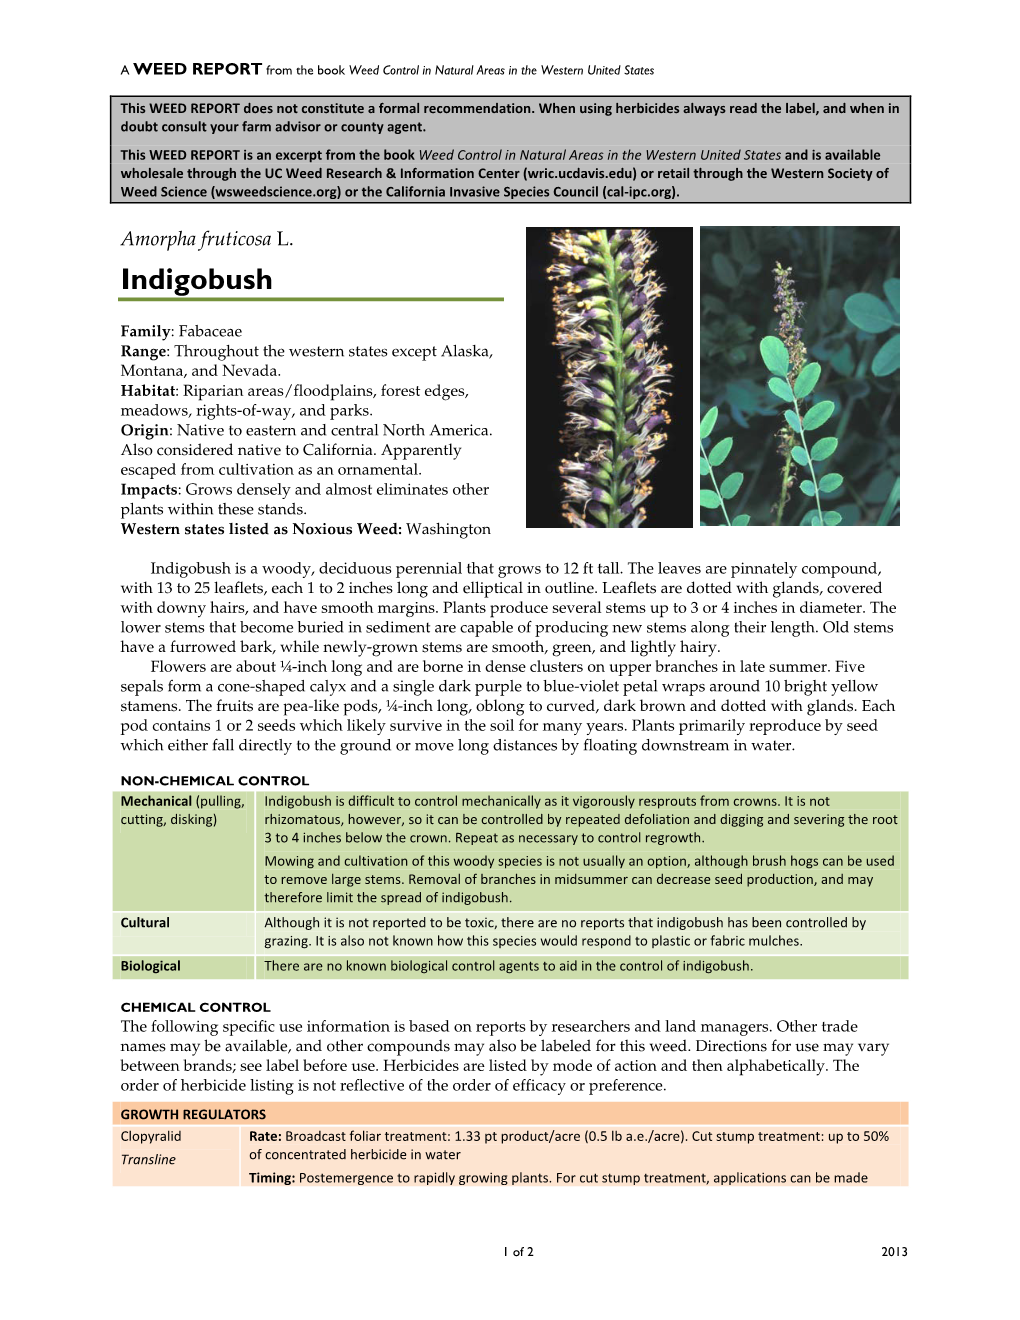 Amorpha Fruticosa L